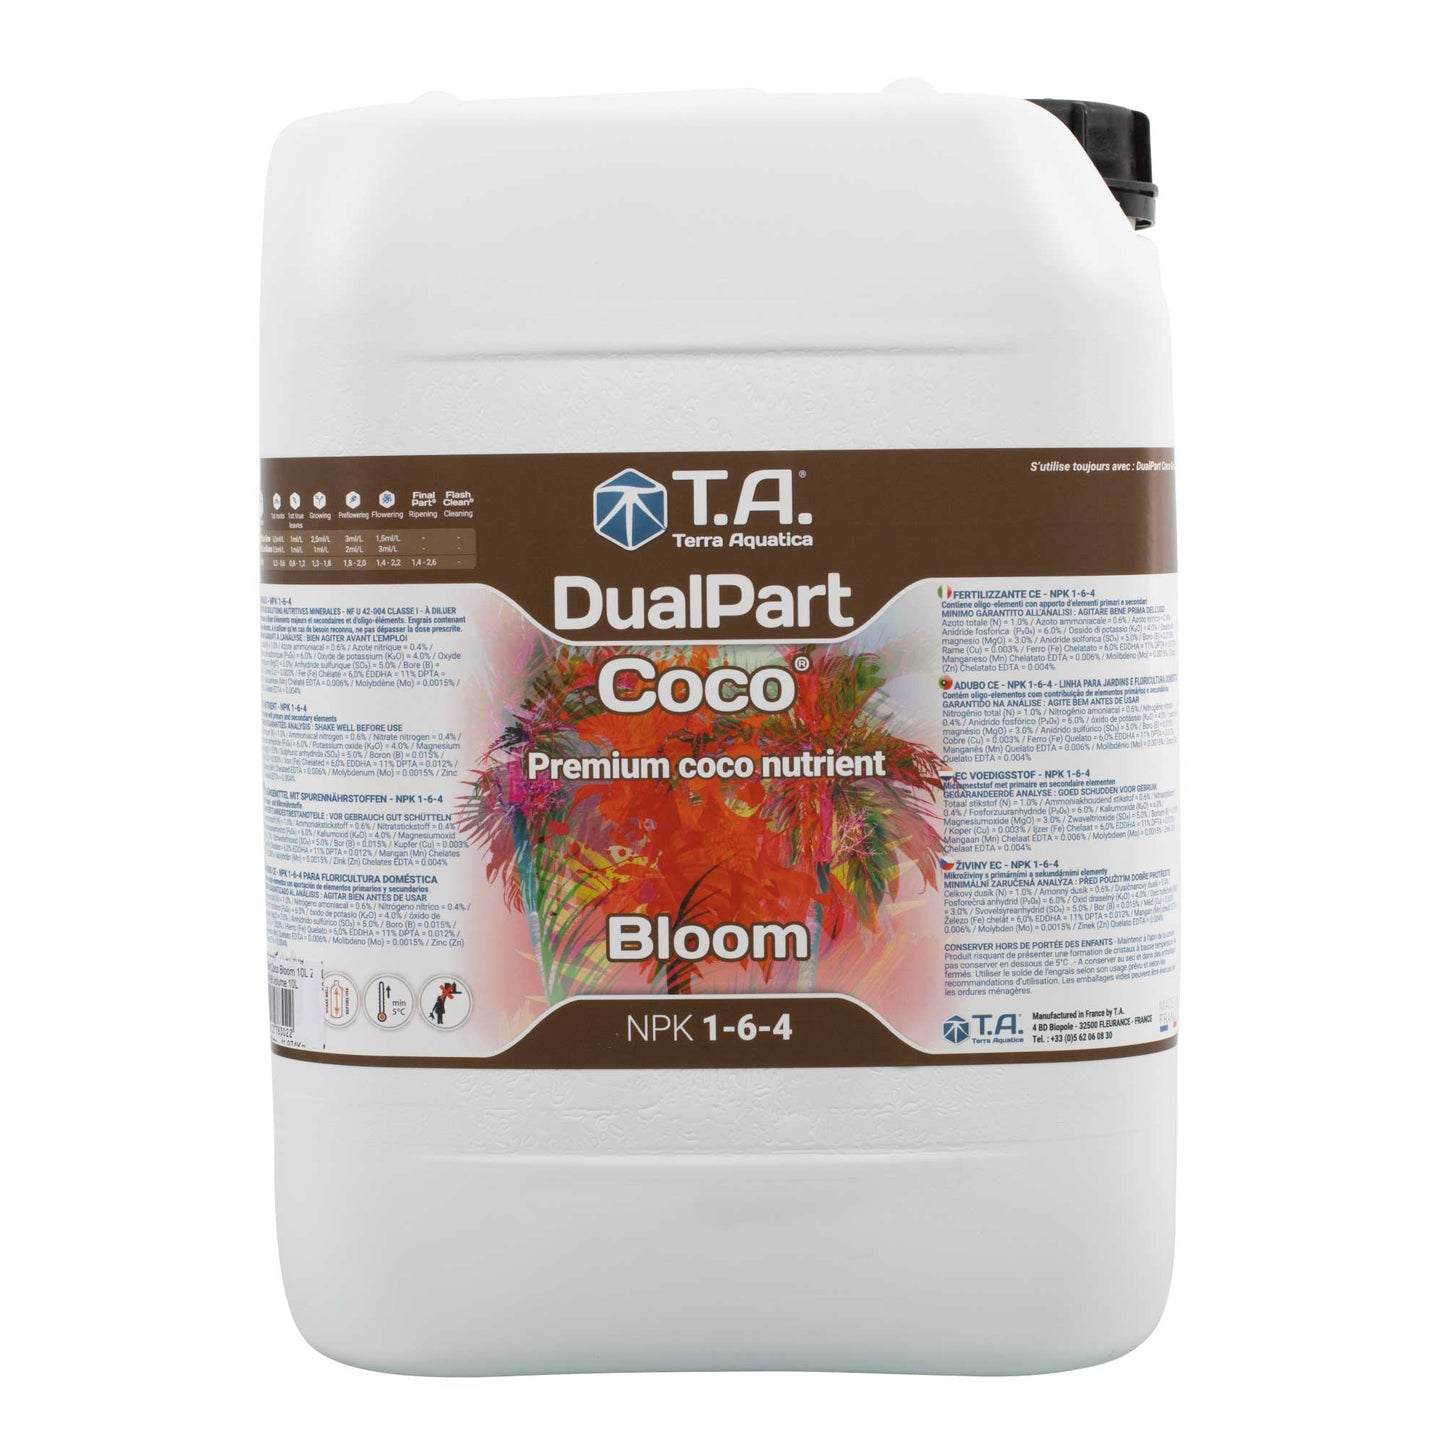 T.A. DualPart Coco Bloom デュアルパート ココ ブルーム（2パートベース肥料）